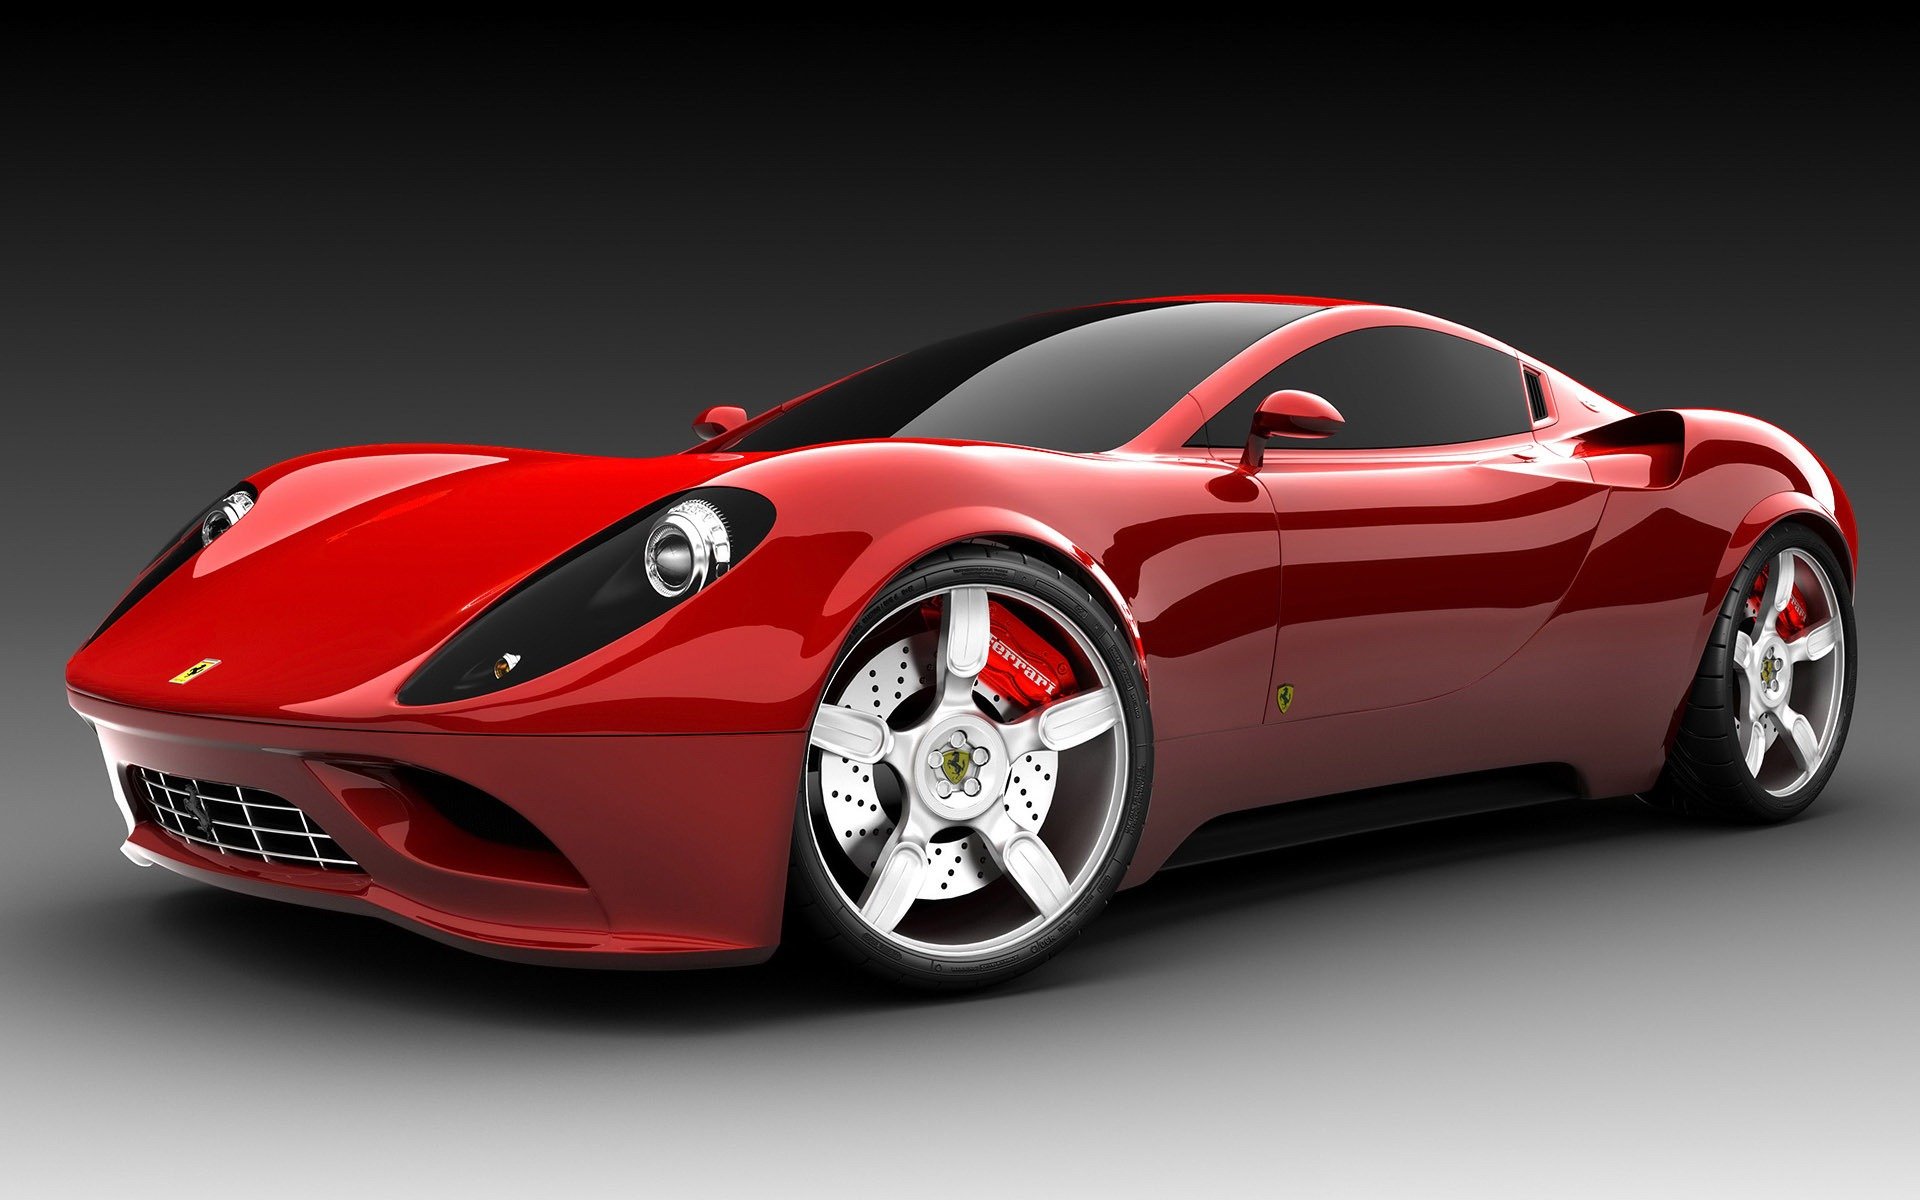 Ferrari car desktop wallpaper hd desktop wallpapers free to download